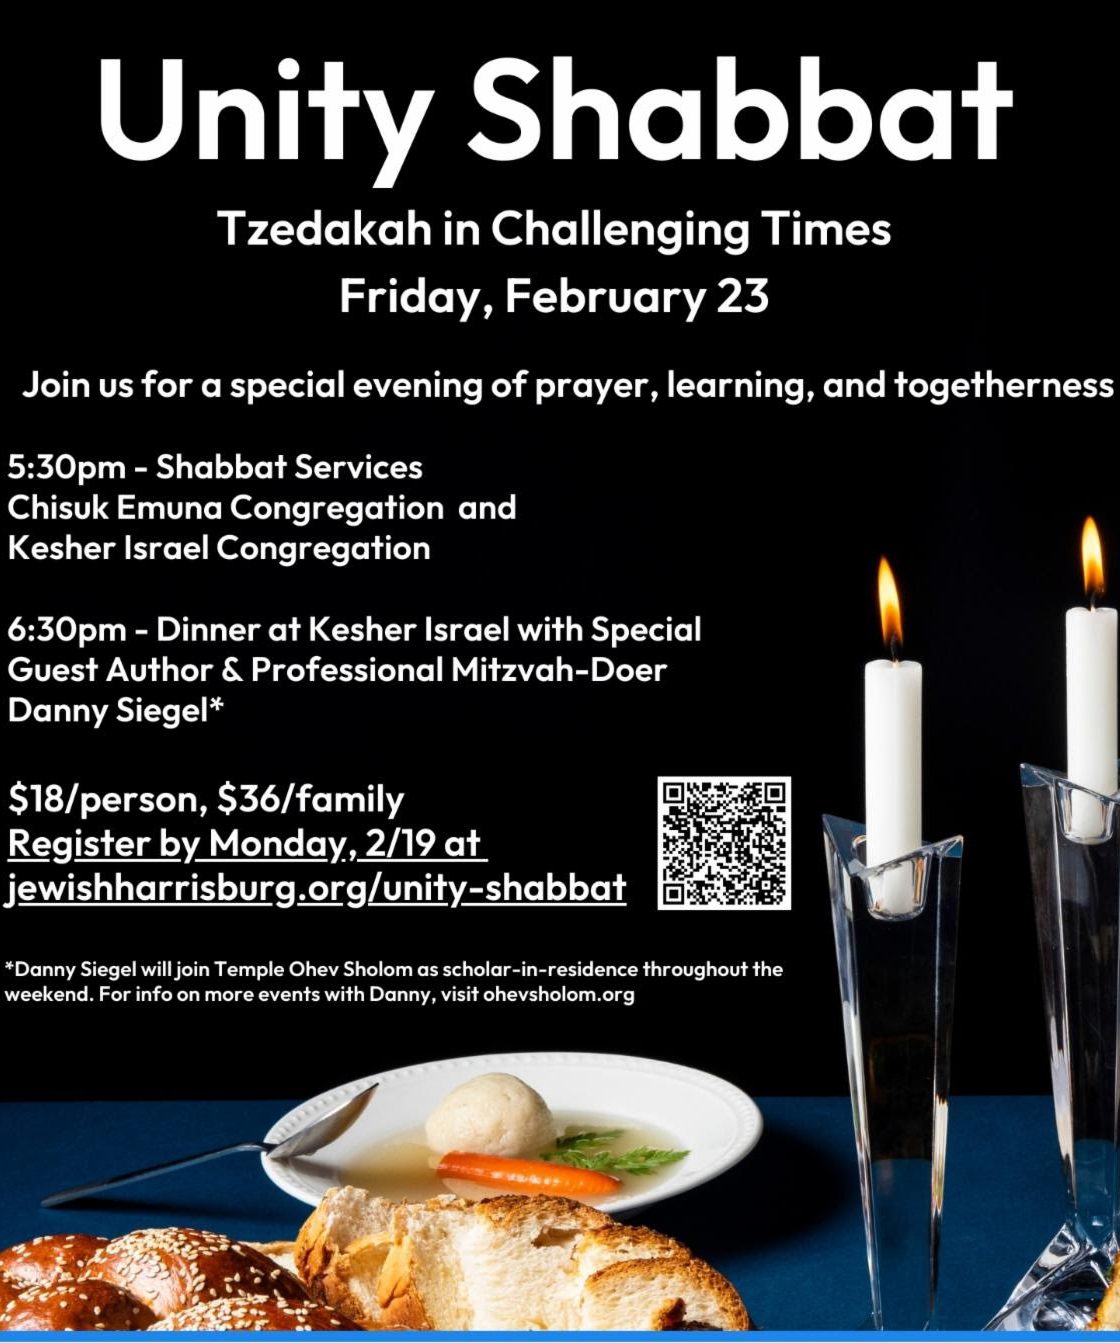 Unity Shabbat: Tzedakah in Challenging Times